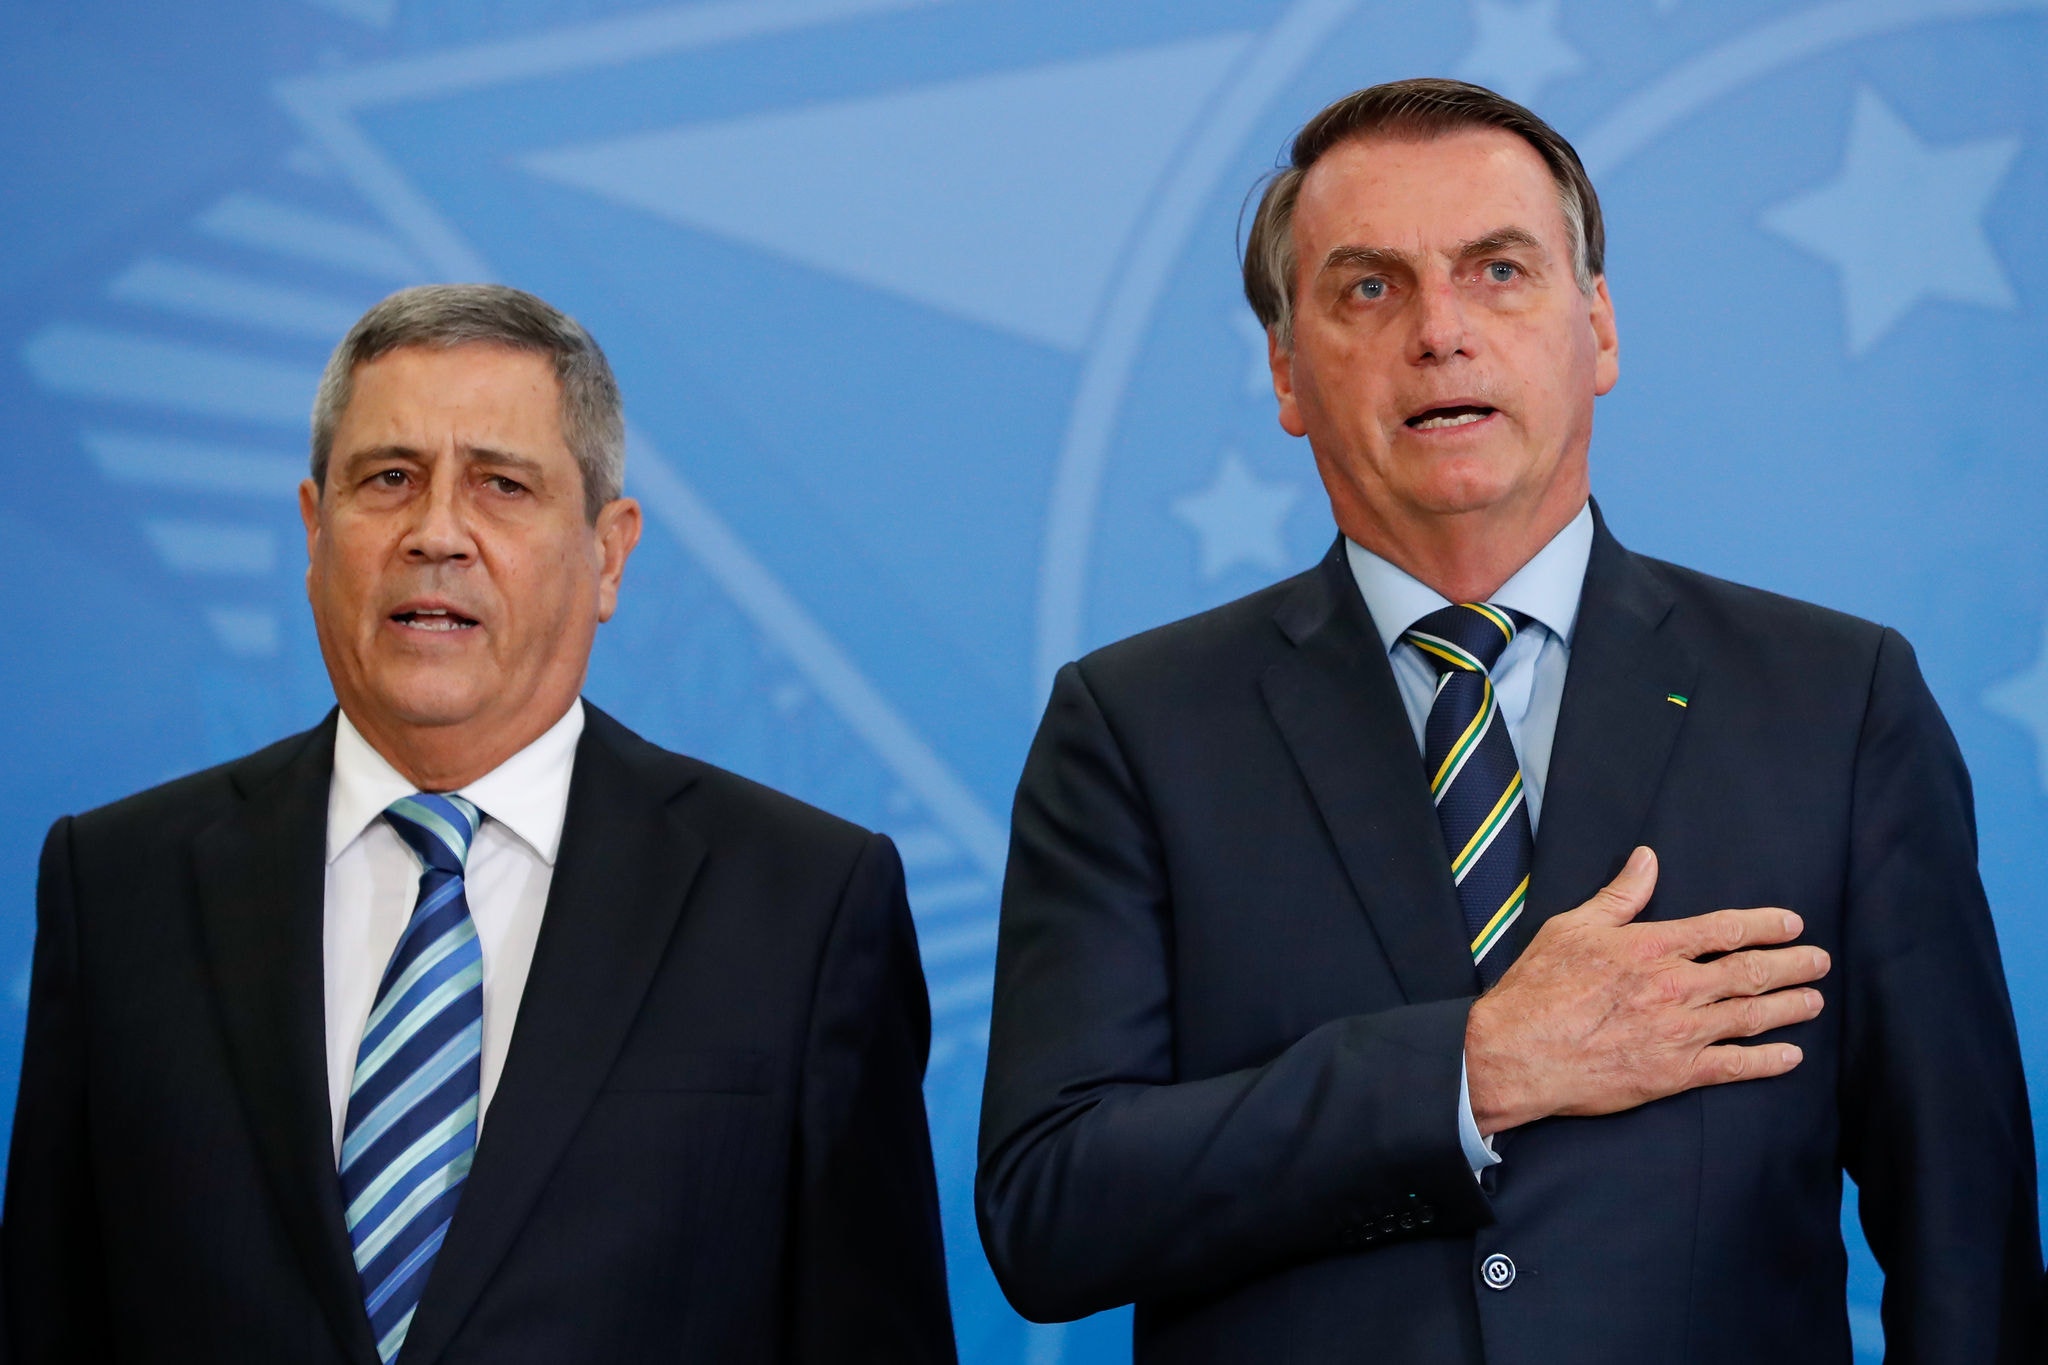 O ex-presidente Jair Bolsonaro (PL) e o general Walter Braga Netto (PL)  durante evento no Palácio do Planalto.